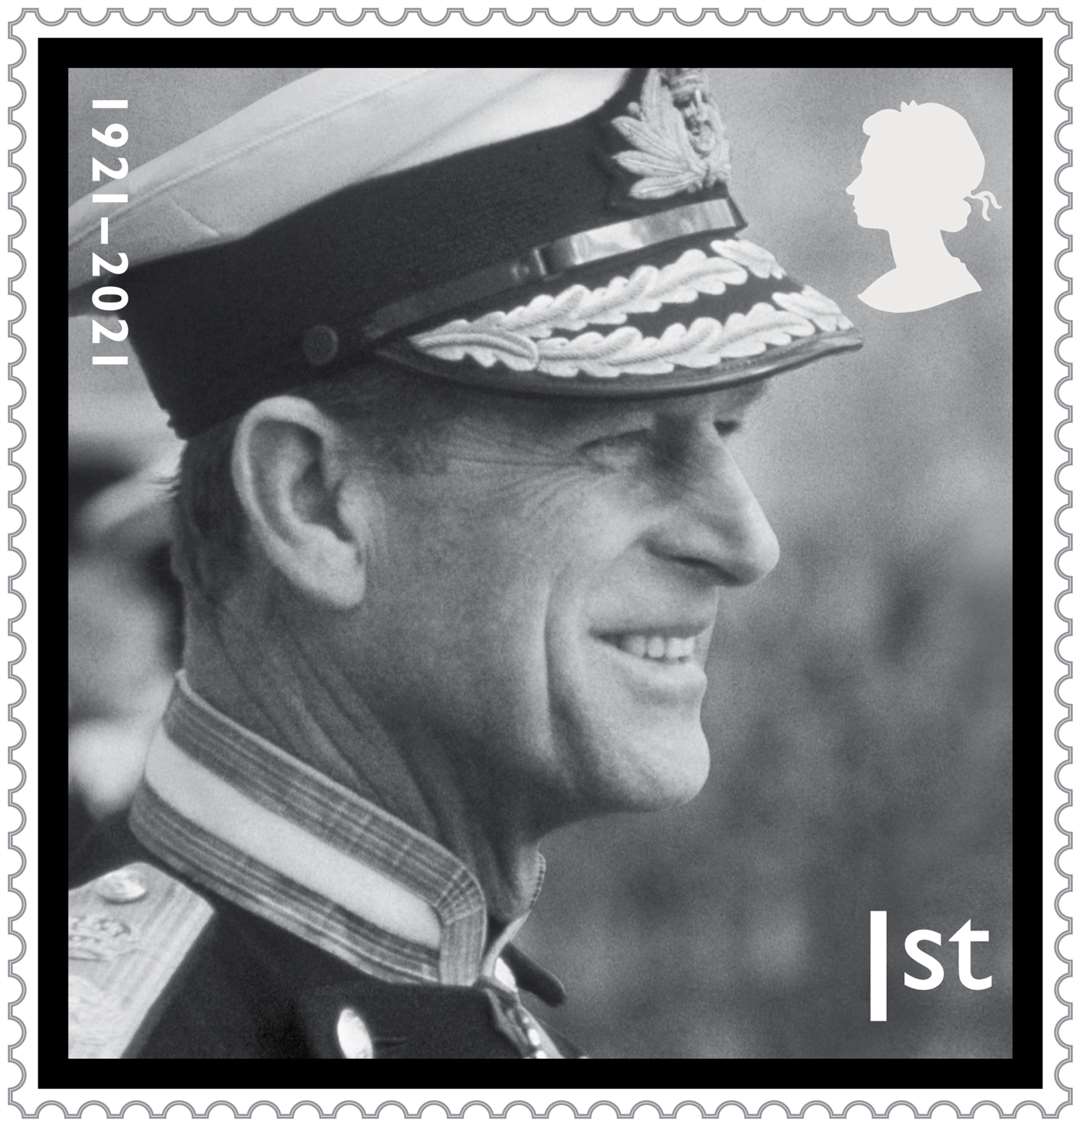 The Duke of Edinburgh passed away in April aged 99